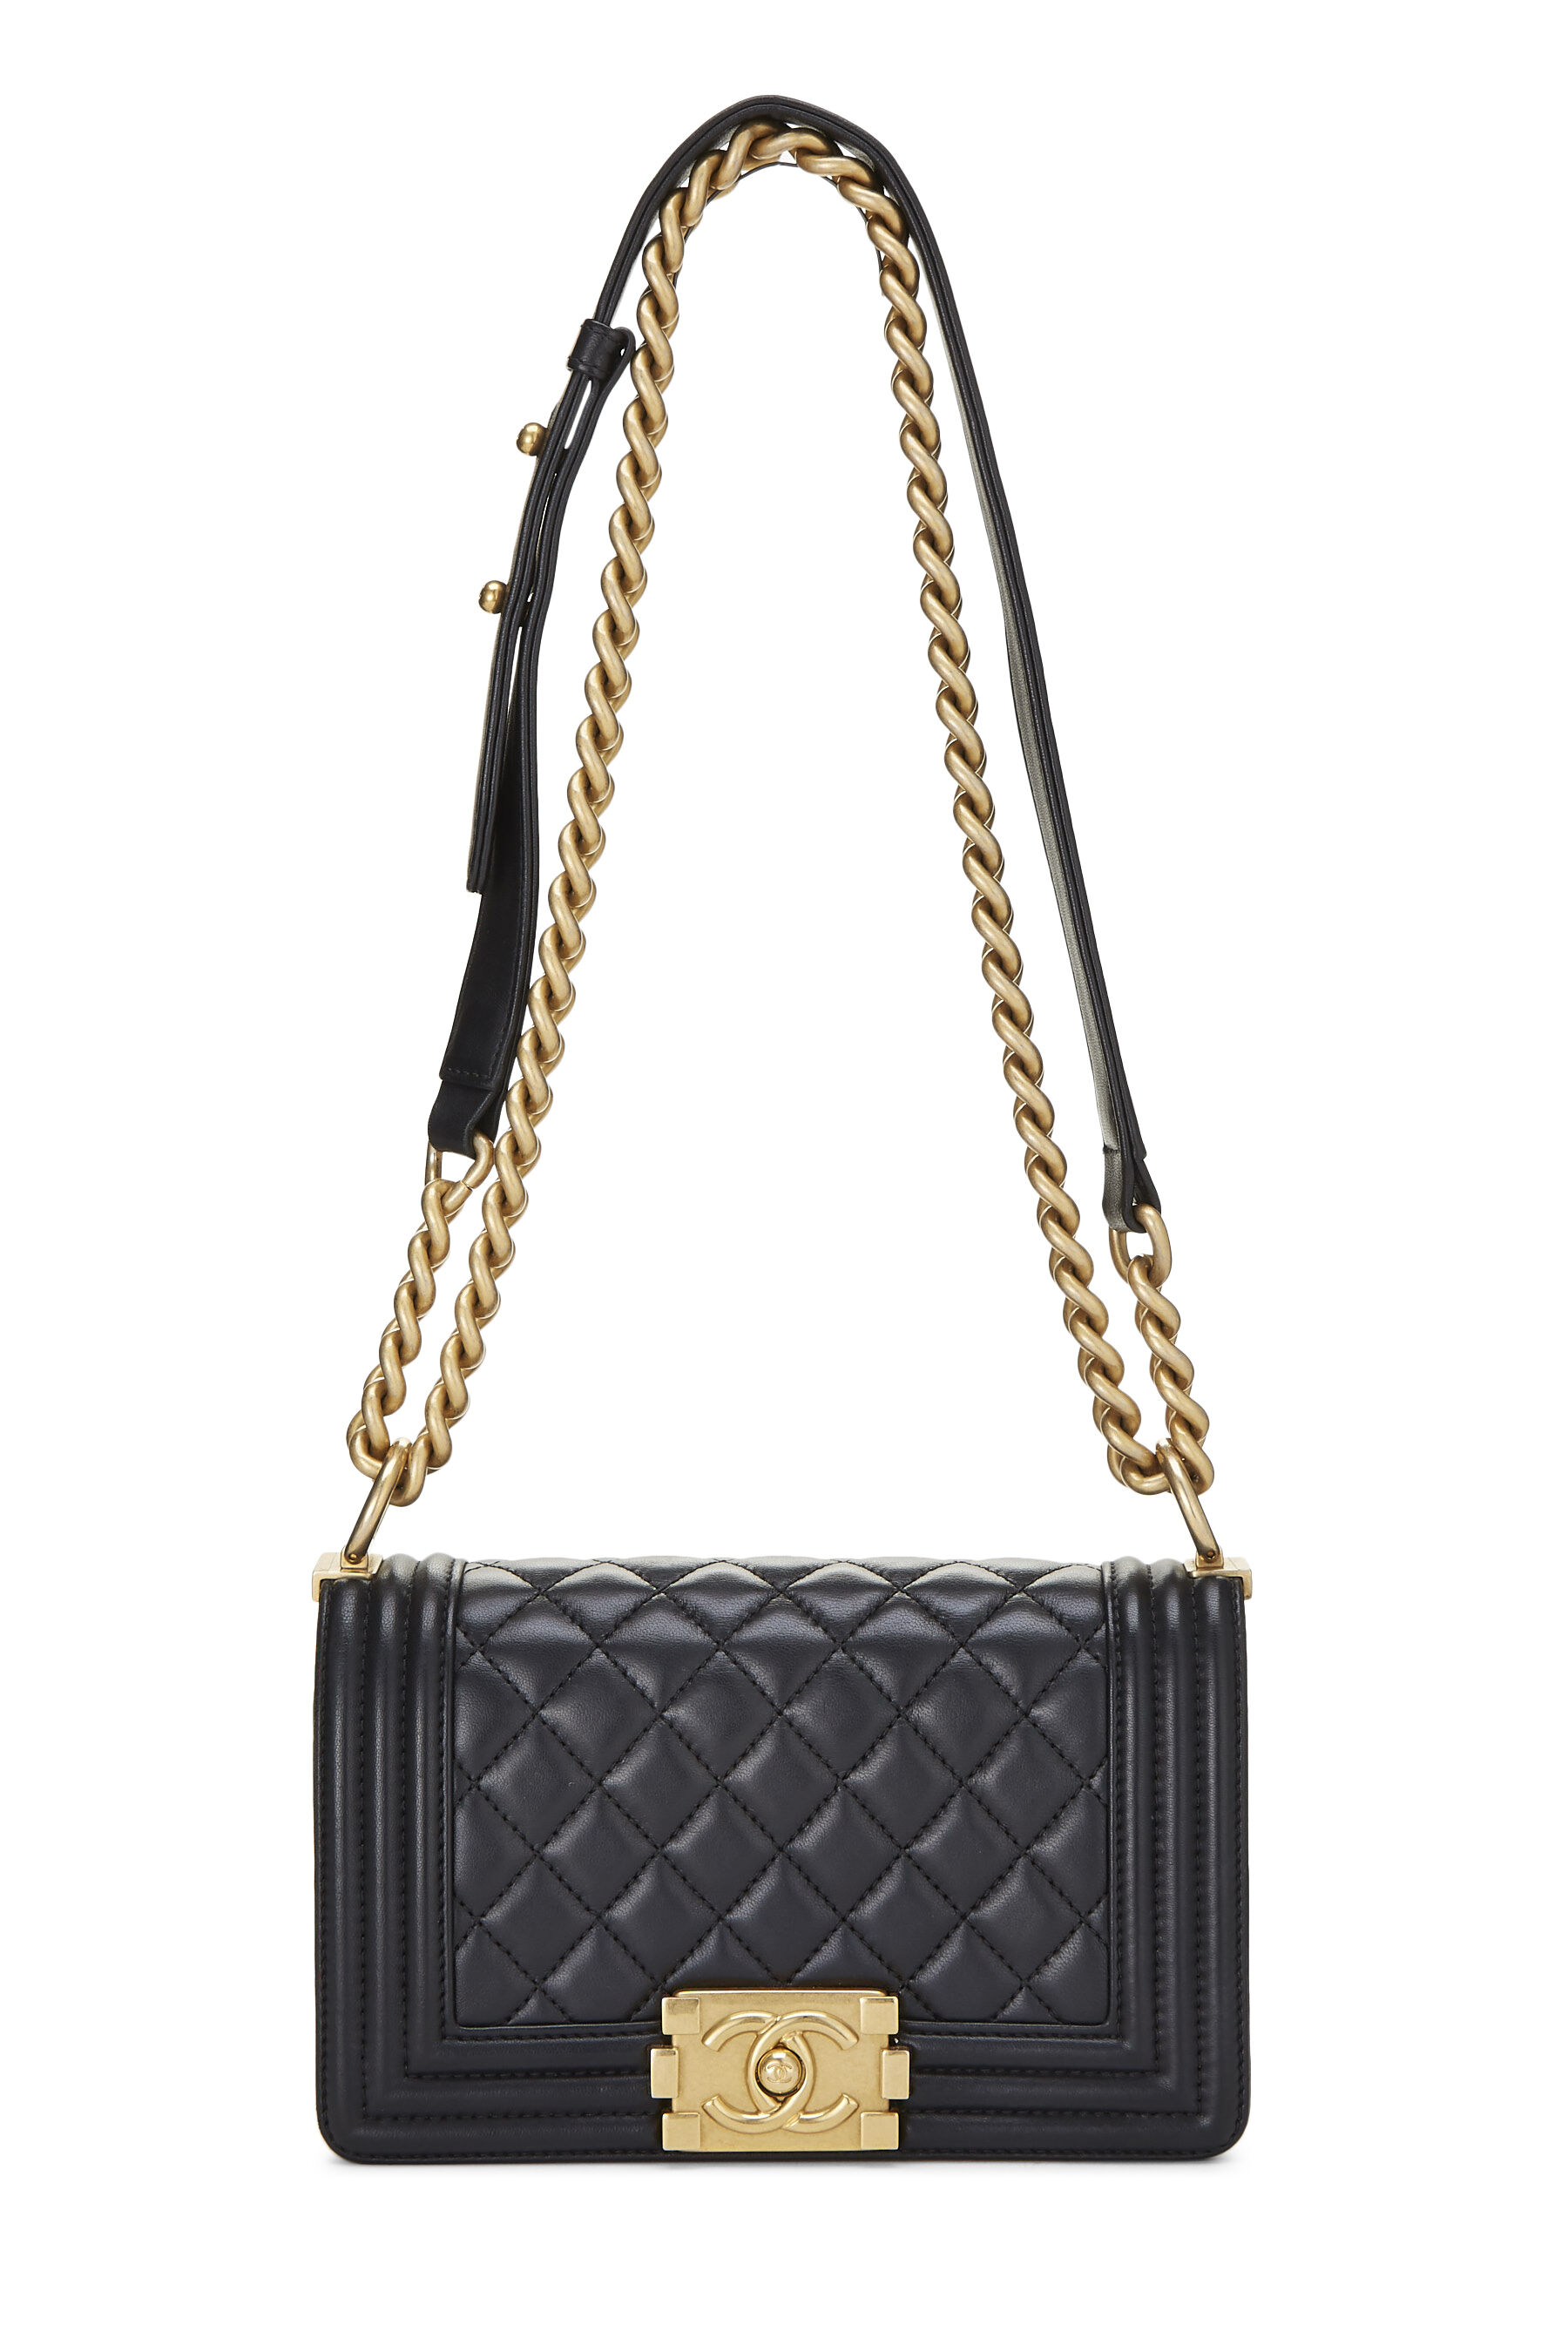 Chanel Black Quilted Lambskin Boy Bag Small Q6B01A1IK7022